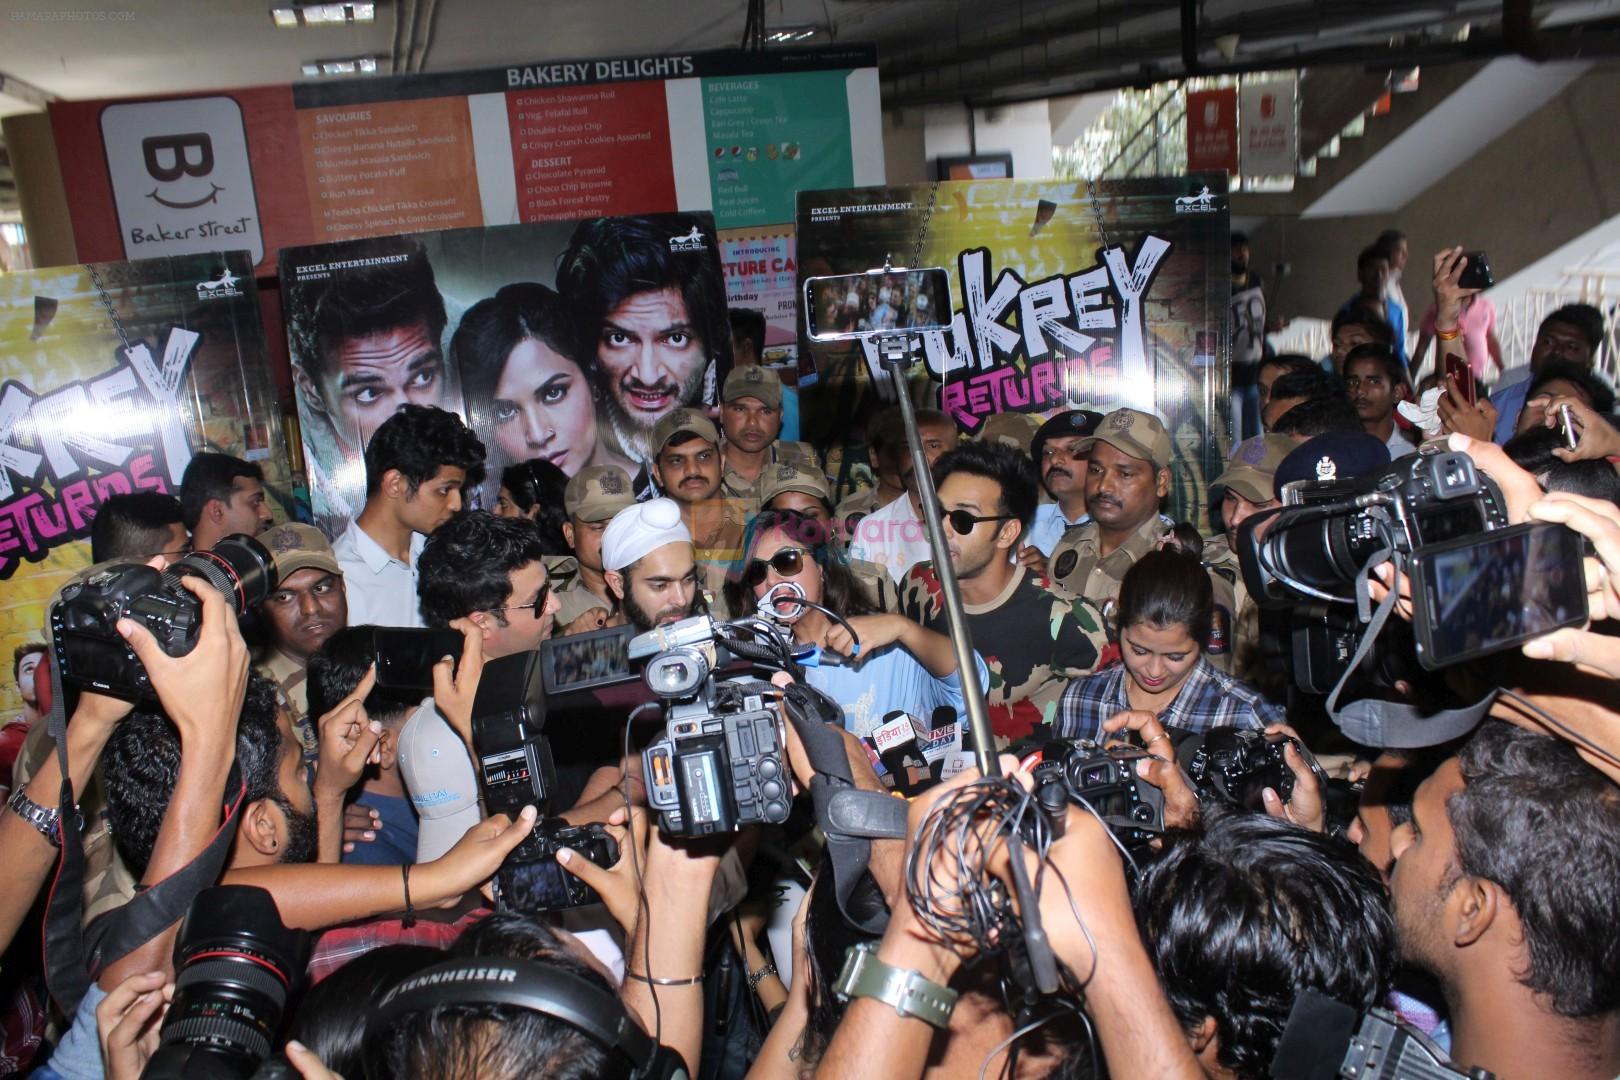 Pulkit Samrat, Richa Chadda, Manjot Singh, Varun Sharma at Fukrey Returns Cast Visit Andheri Metro Station on 30th Nov 2017